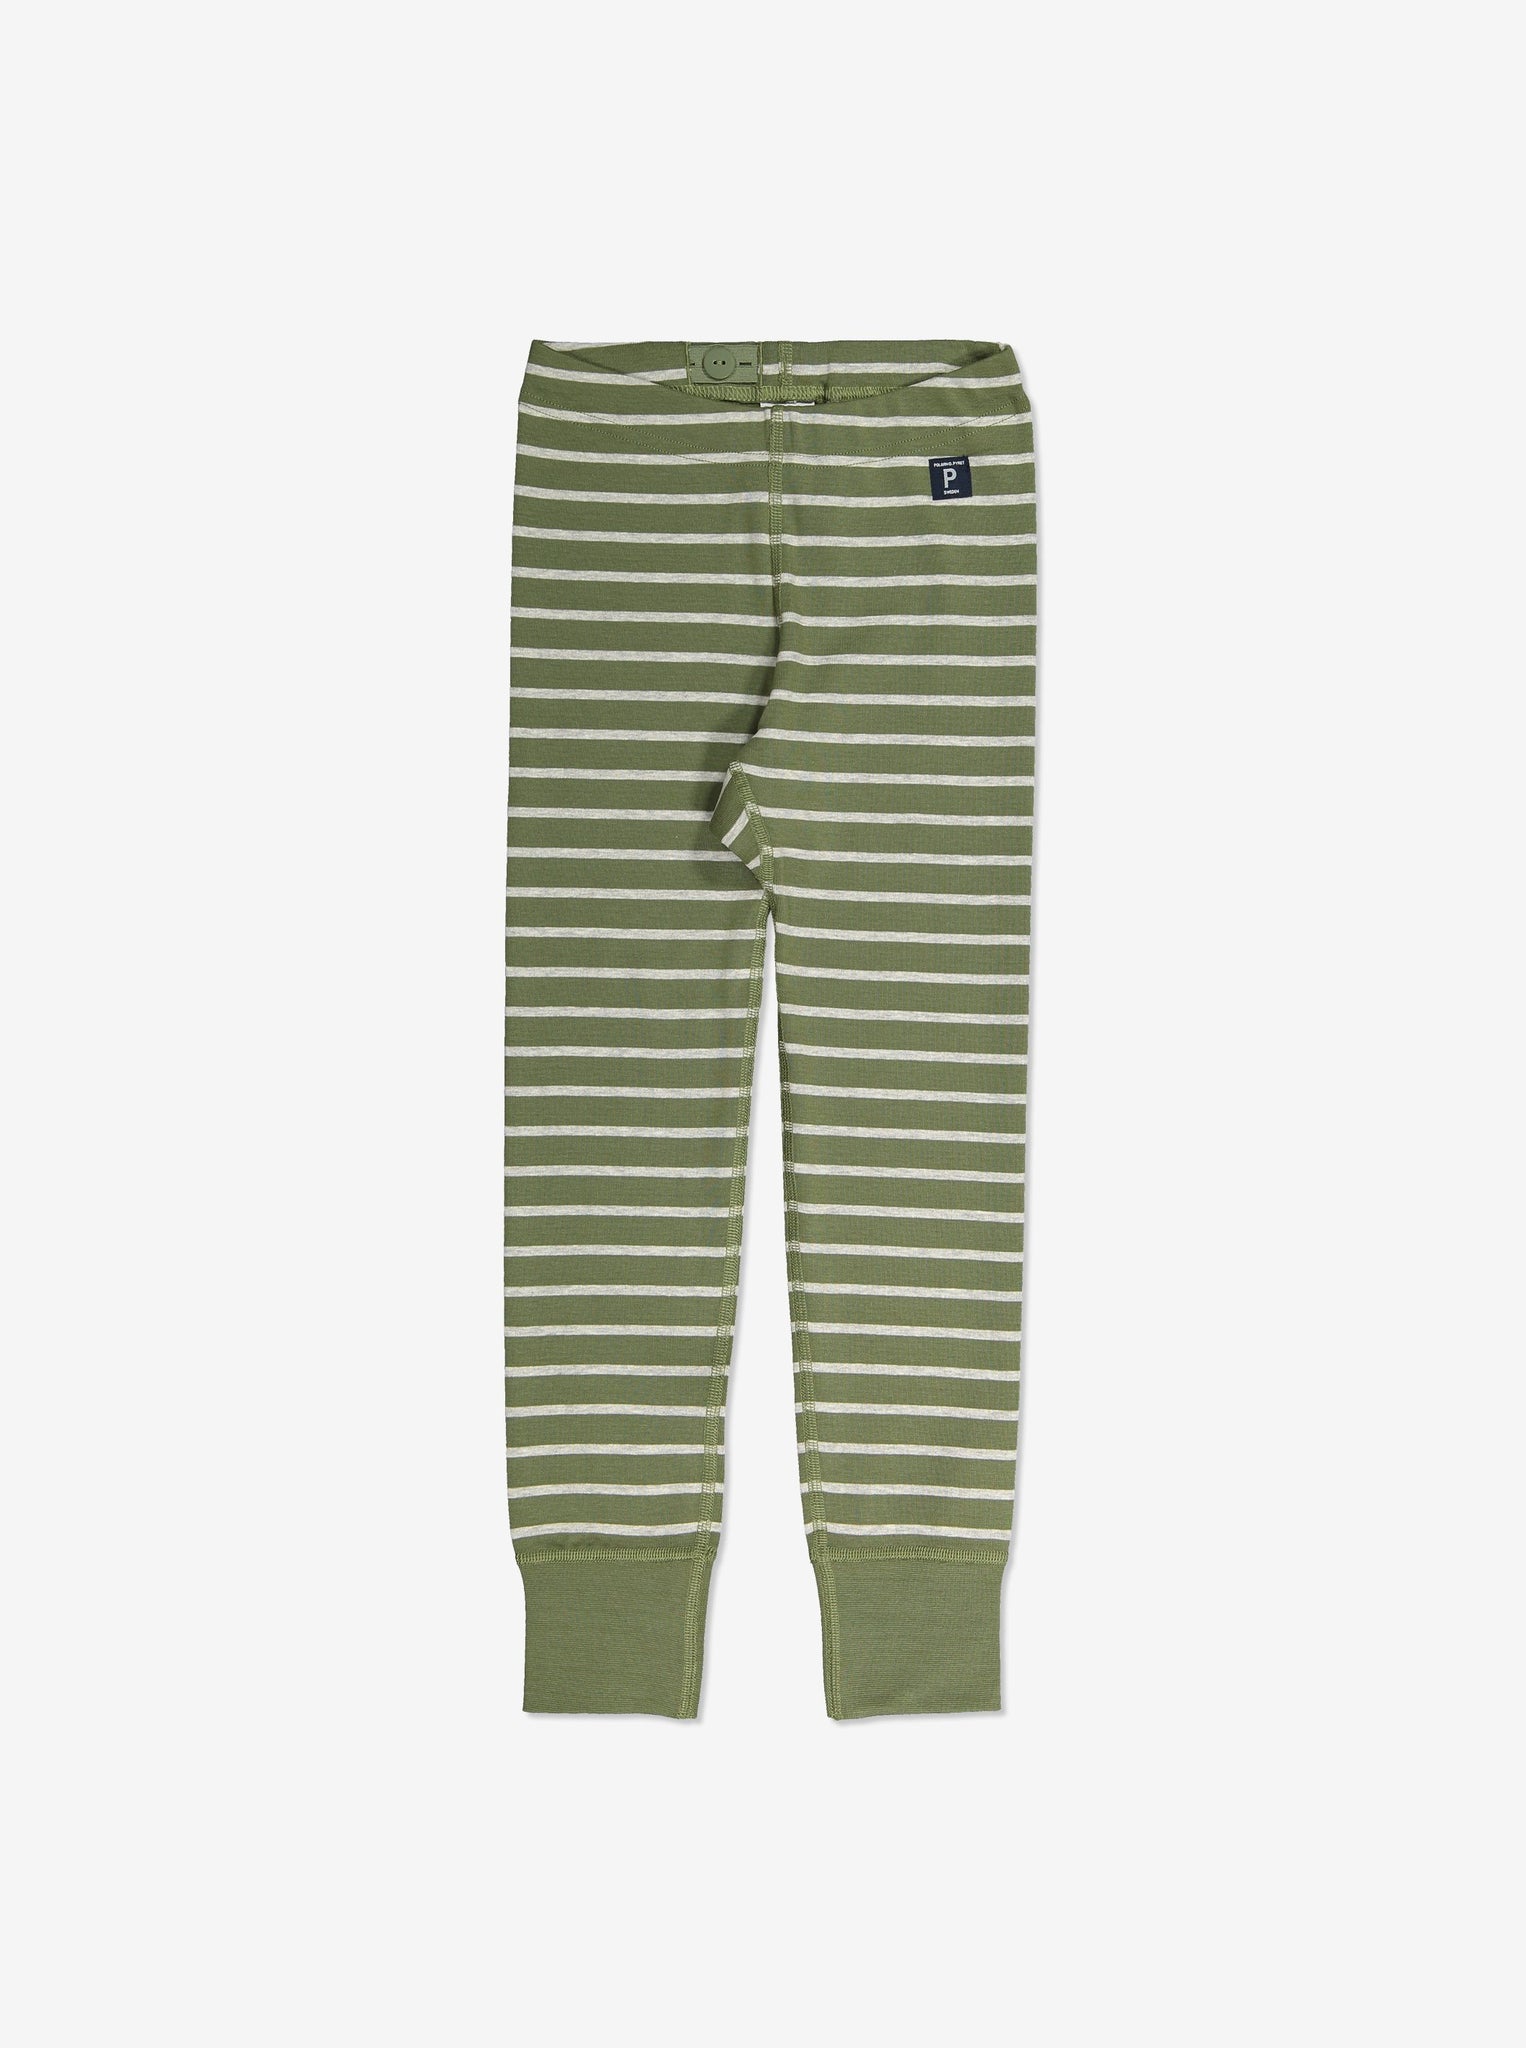 Striped Kids Leggings-Unisex-2m-6y-Green